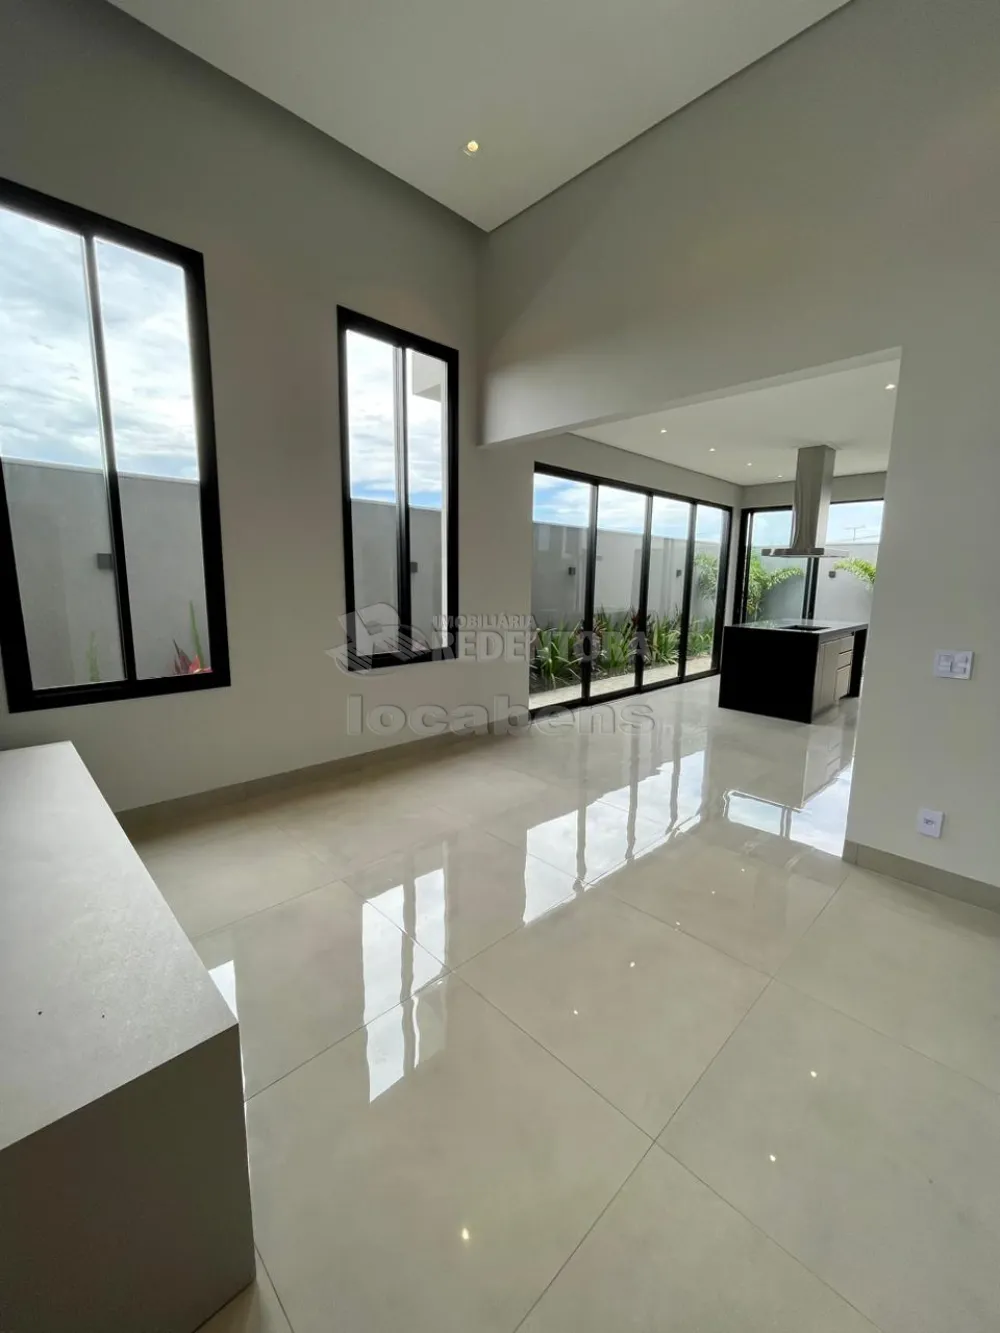 Alugar Casa / Condomínio em Mirassol apenas R$ 5.000,00 - Foto 5